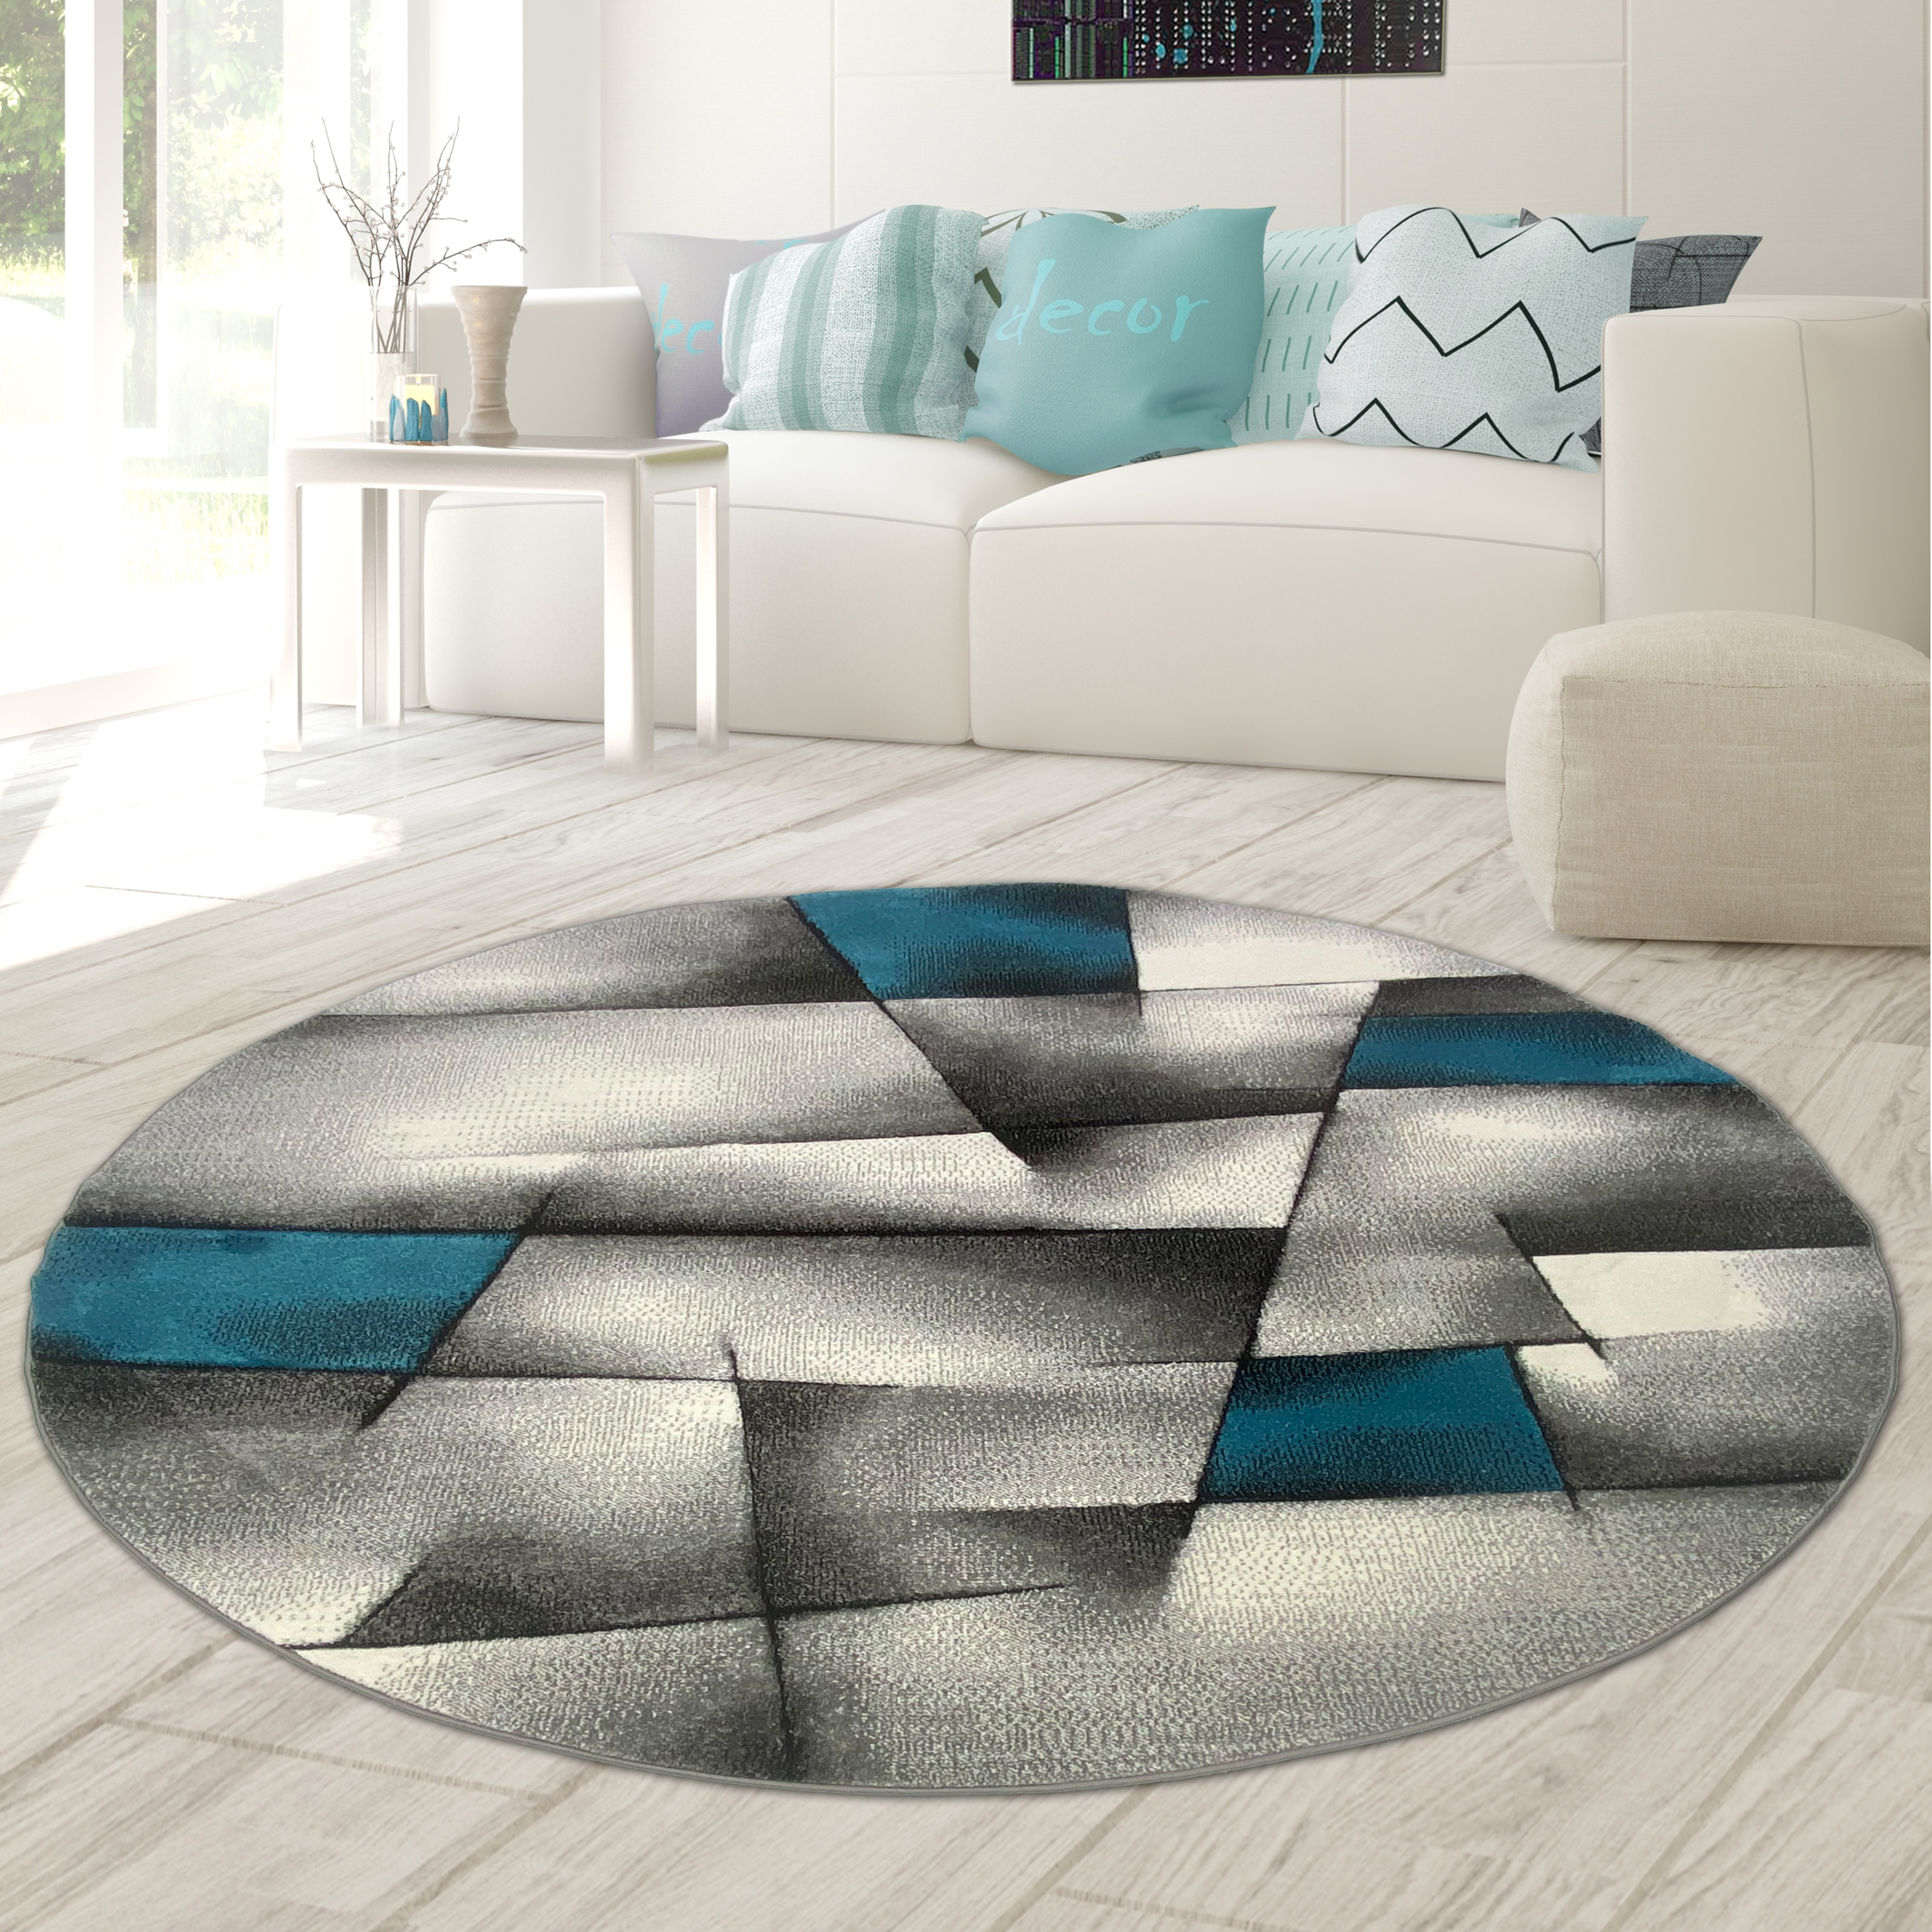 cheap & Teppich dreams Modern carpet High-quality and designer carpets: - -Traum at